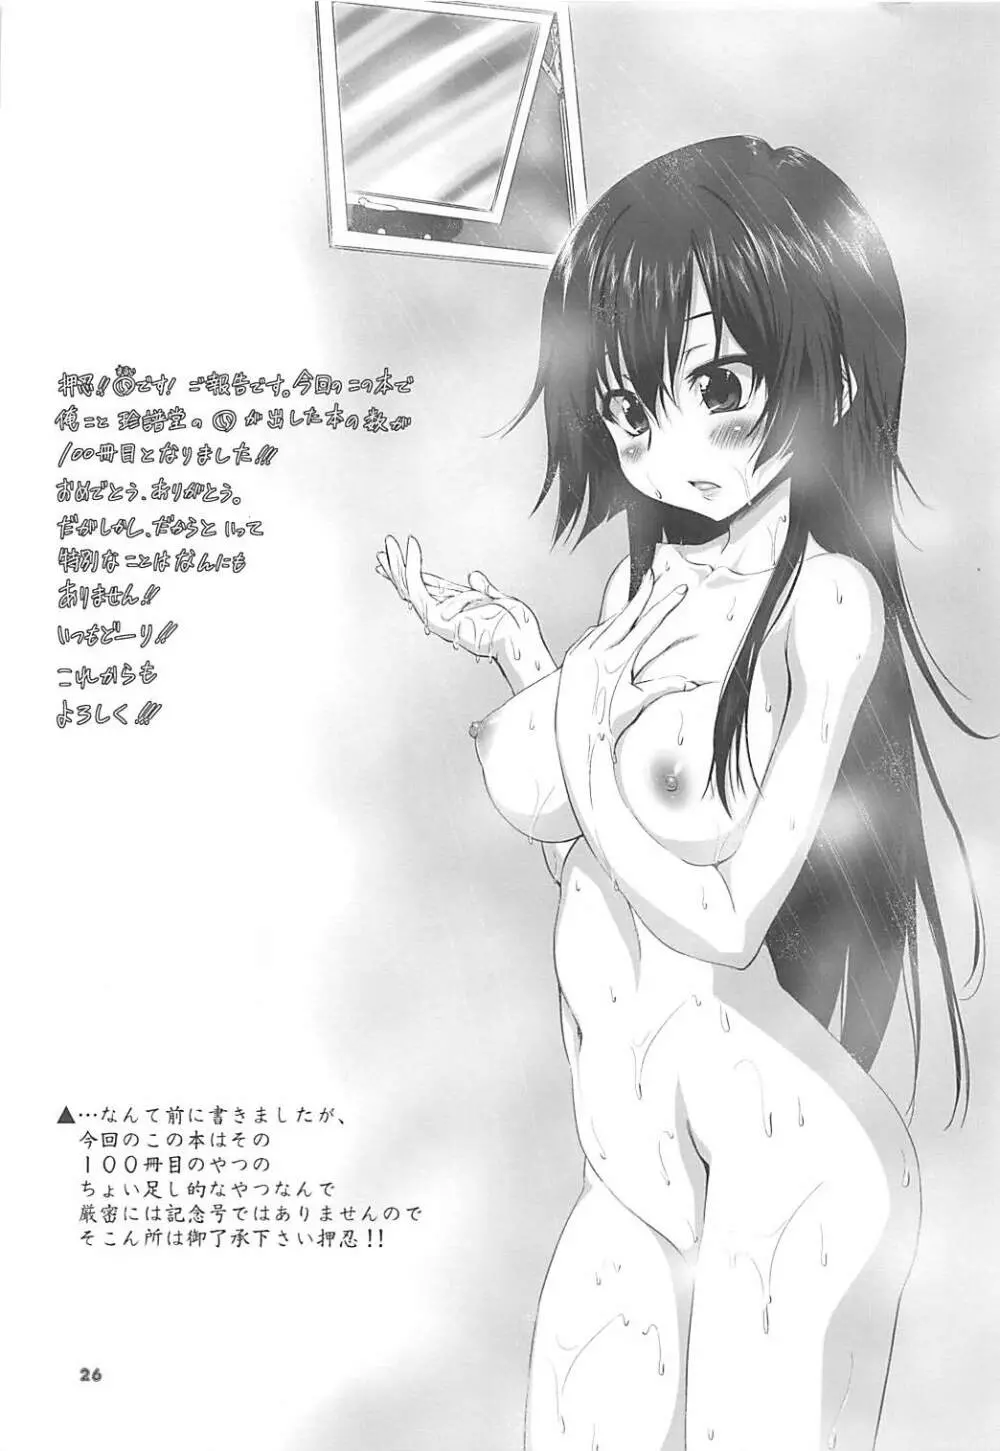 higuma-otoshi 追撃 - page26